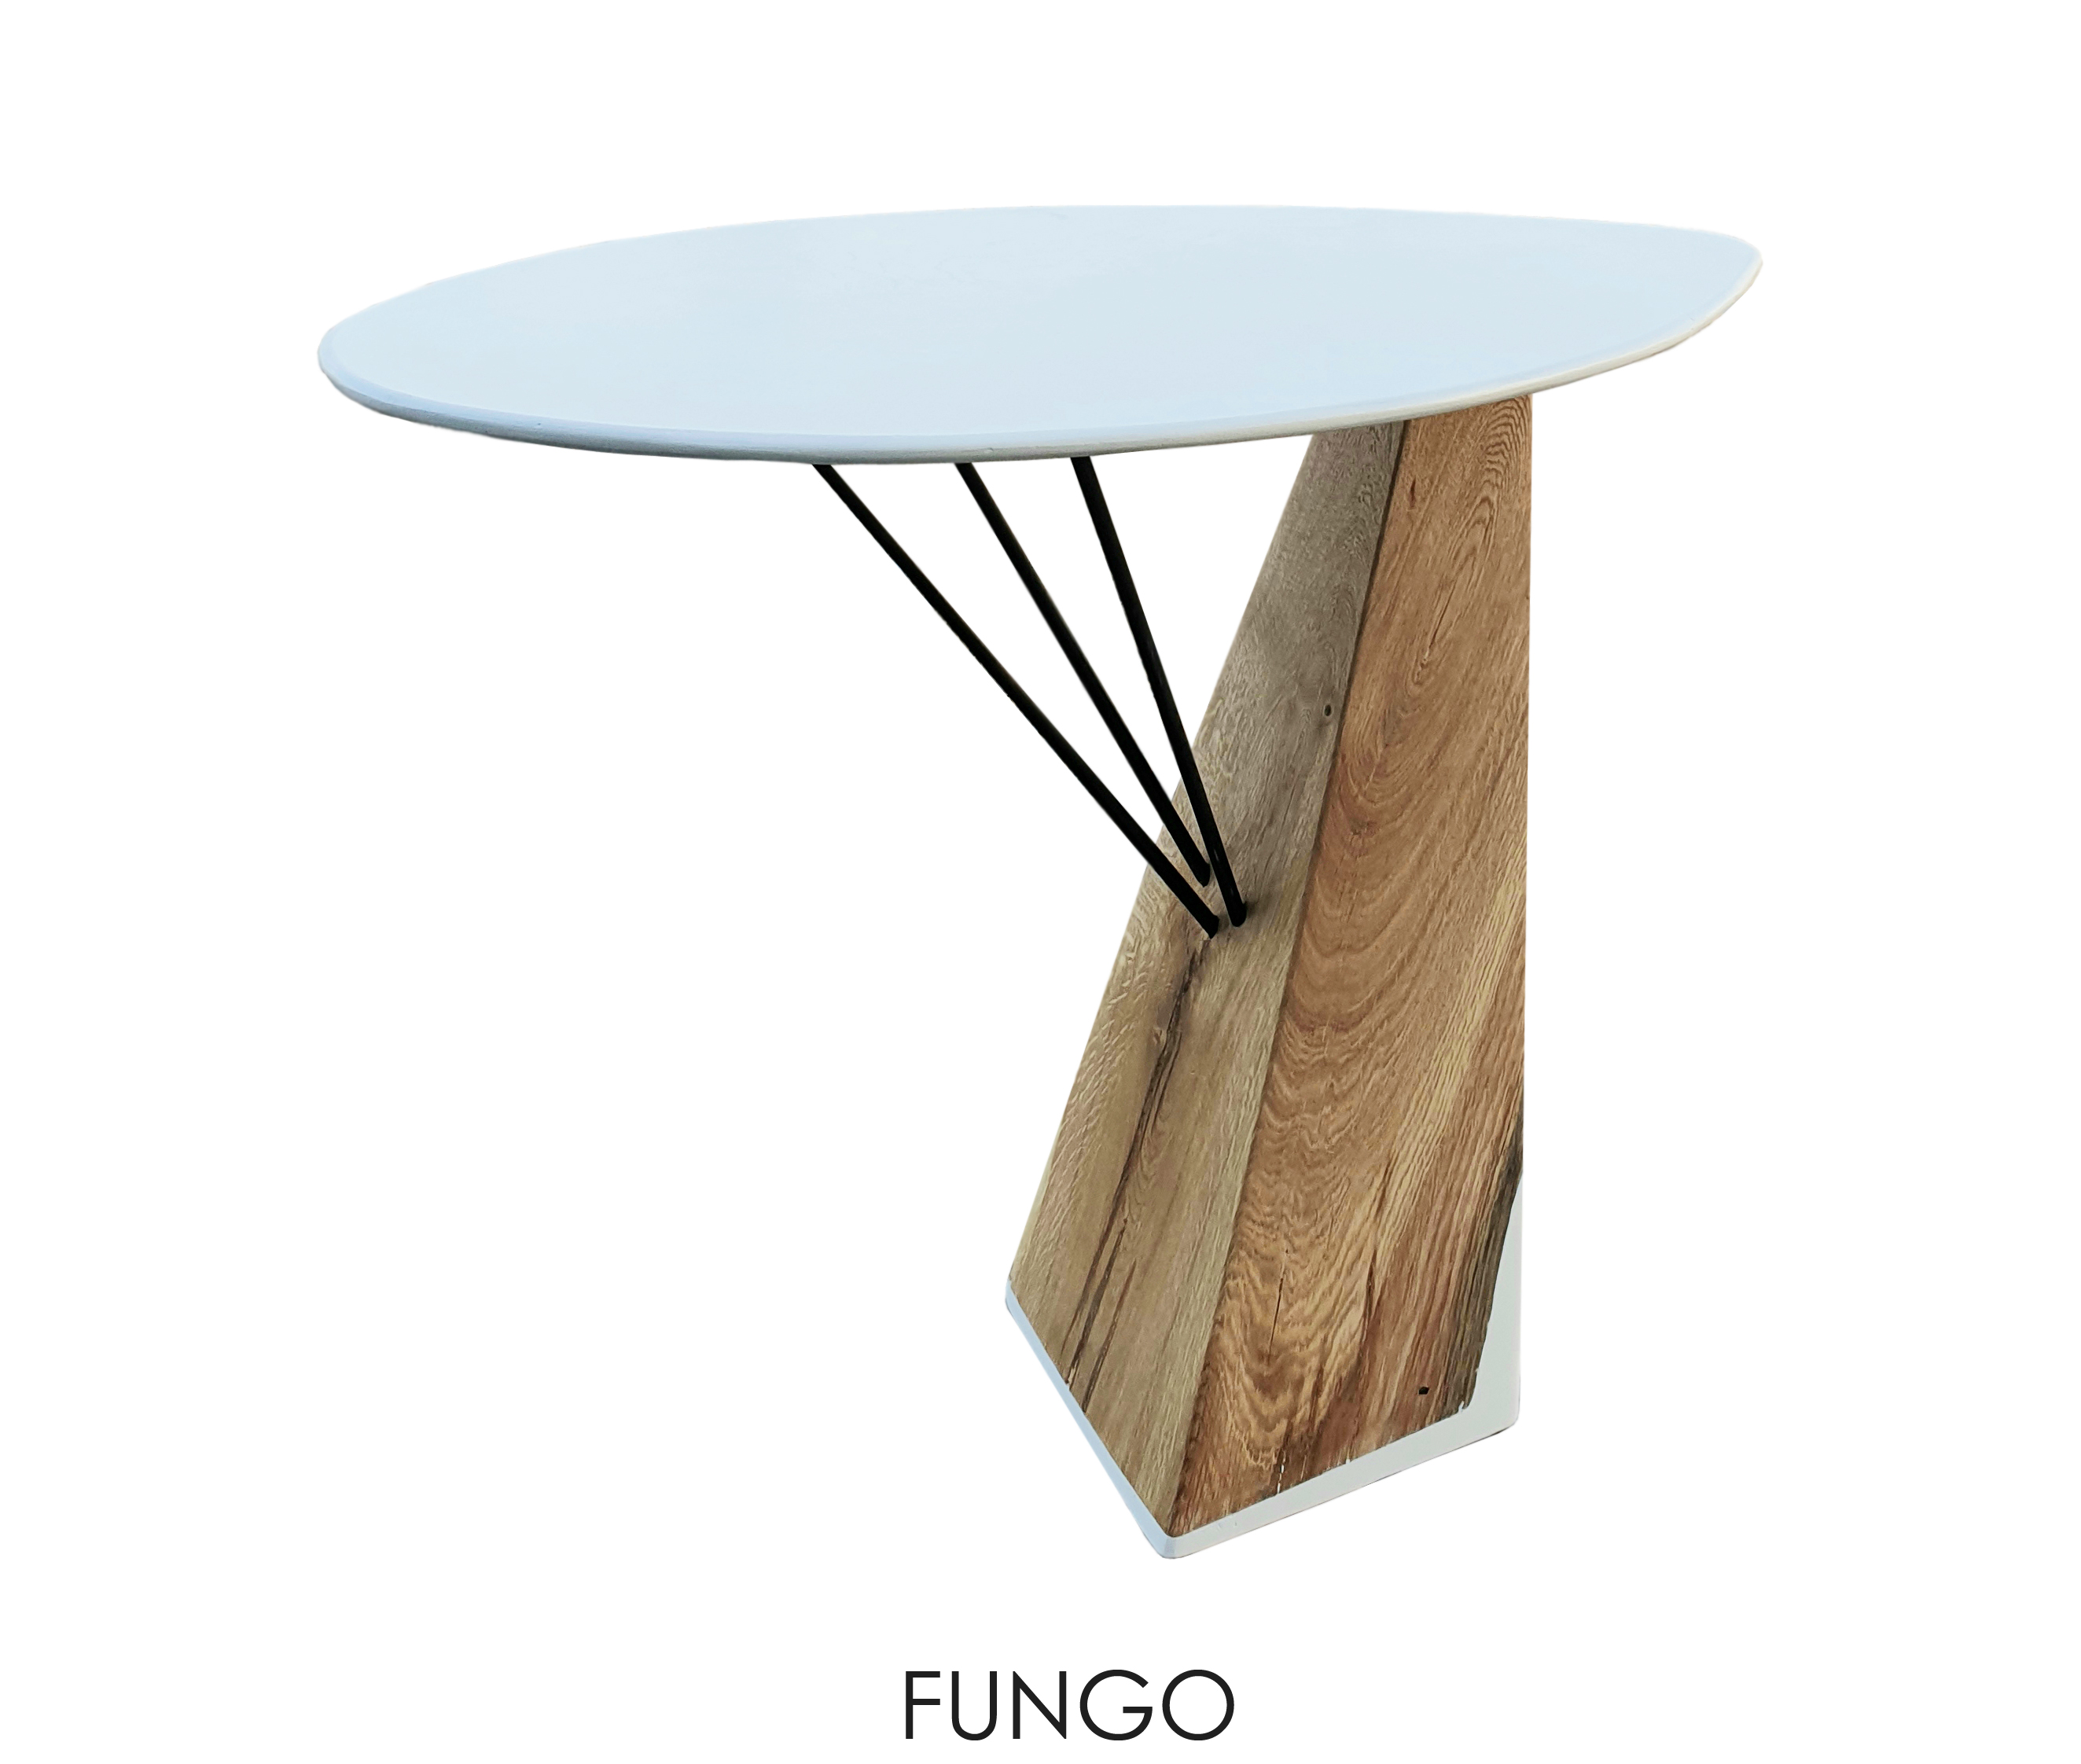 FUNGO (more info soon)